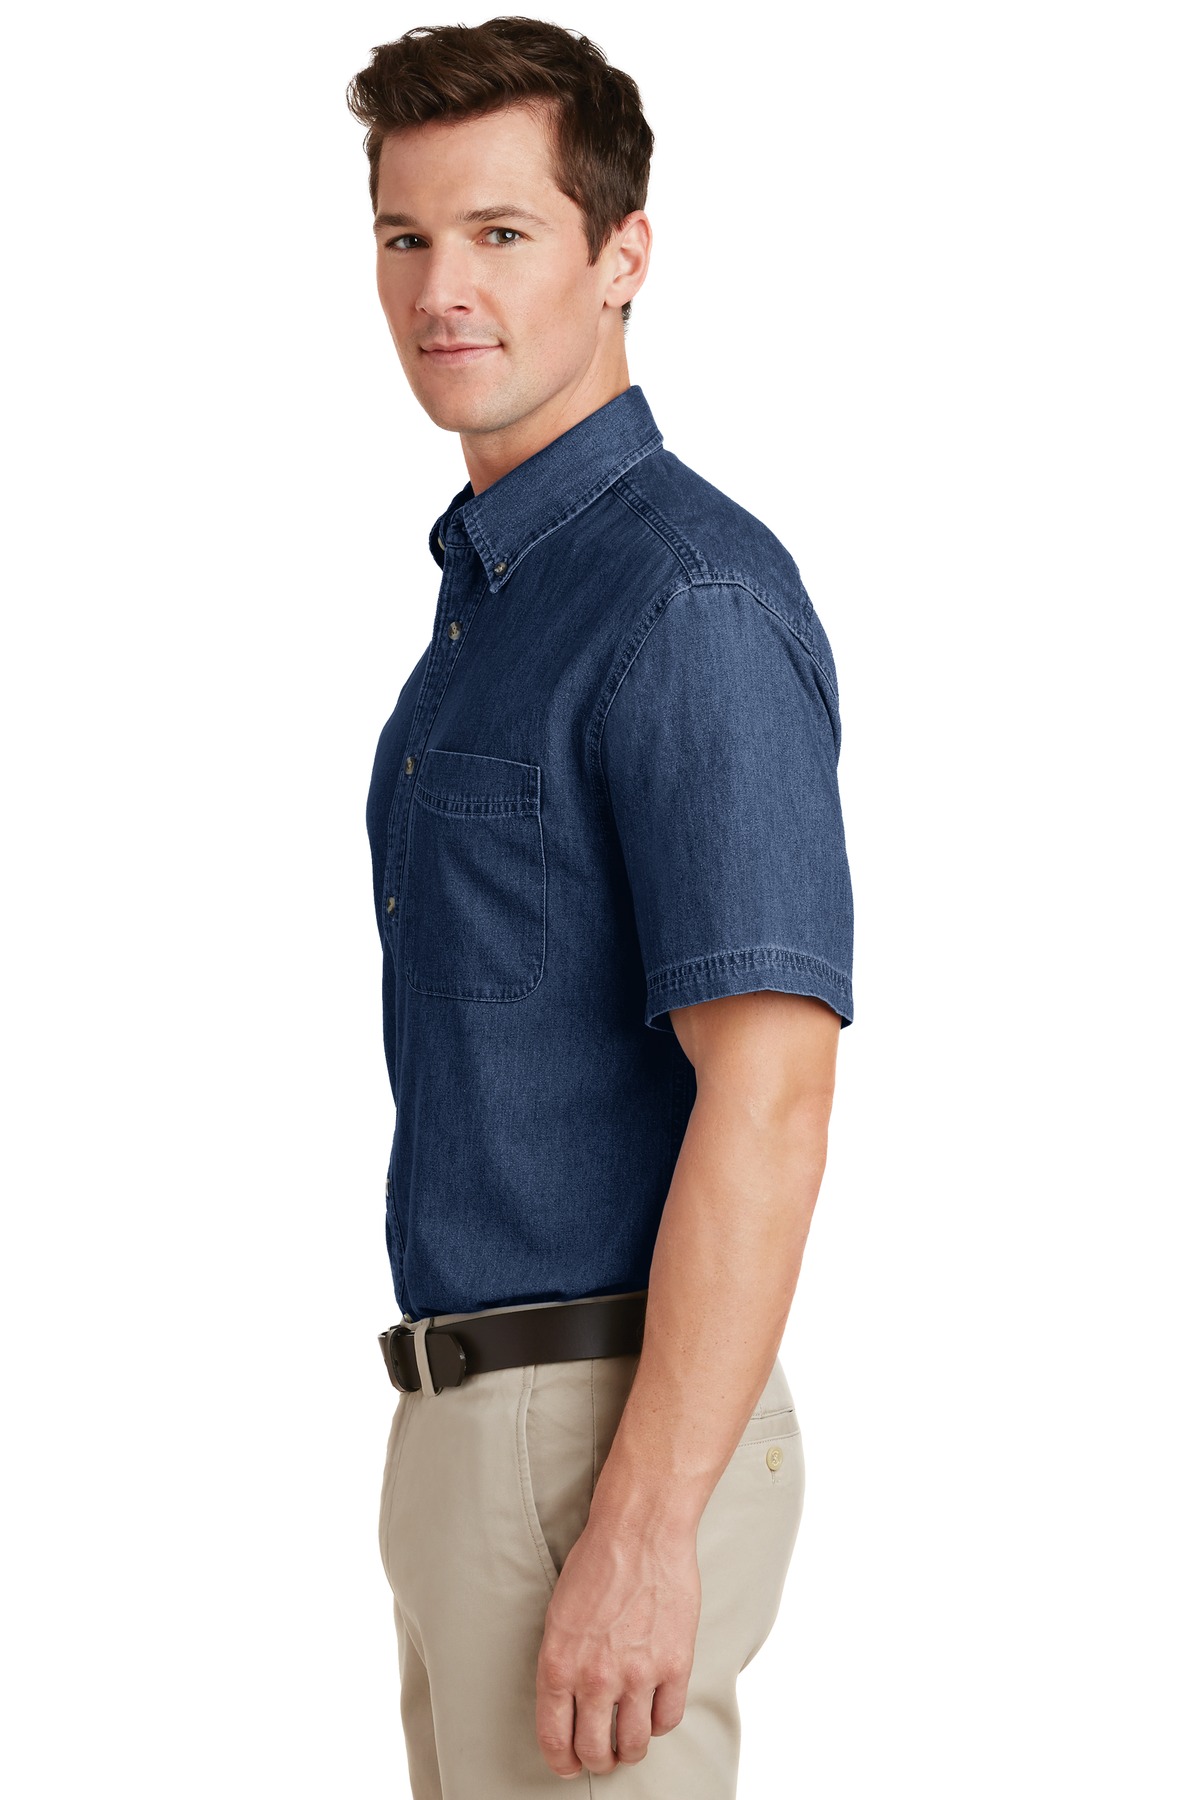 "Port & Company Short Sleeve Value Denim Shirt (SP11) Ink Blue, XL" - image 5 of 6